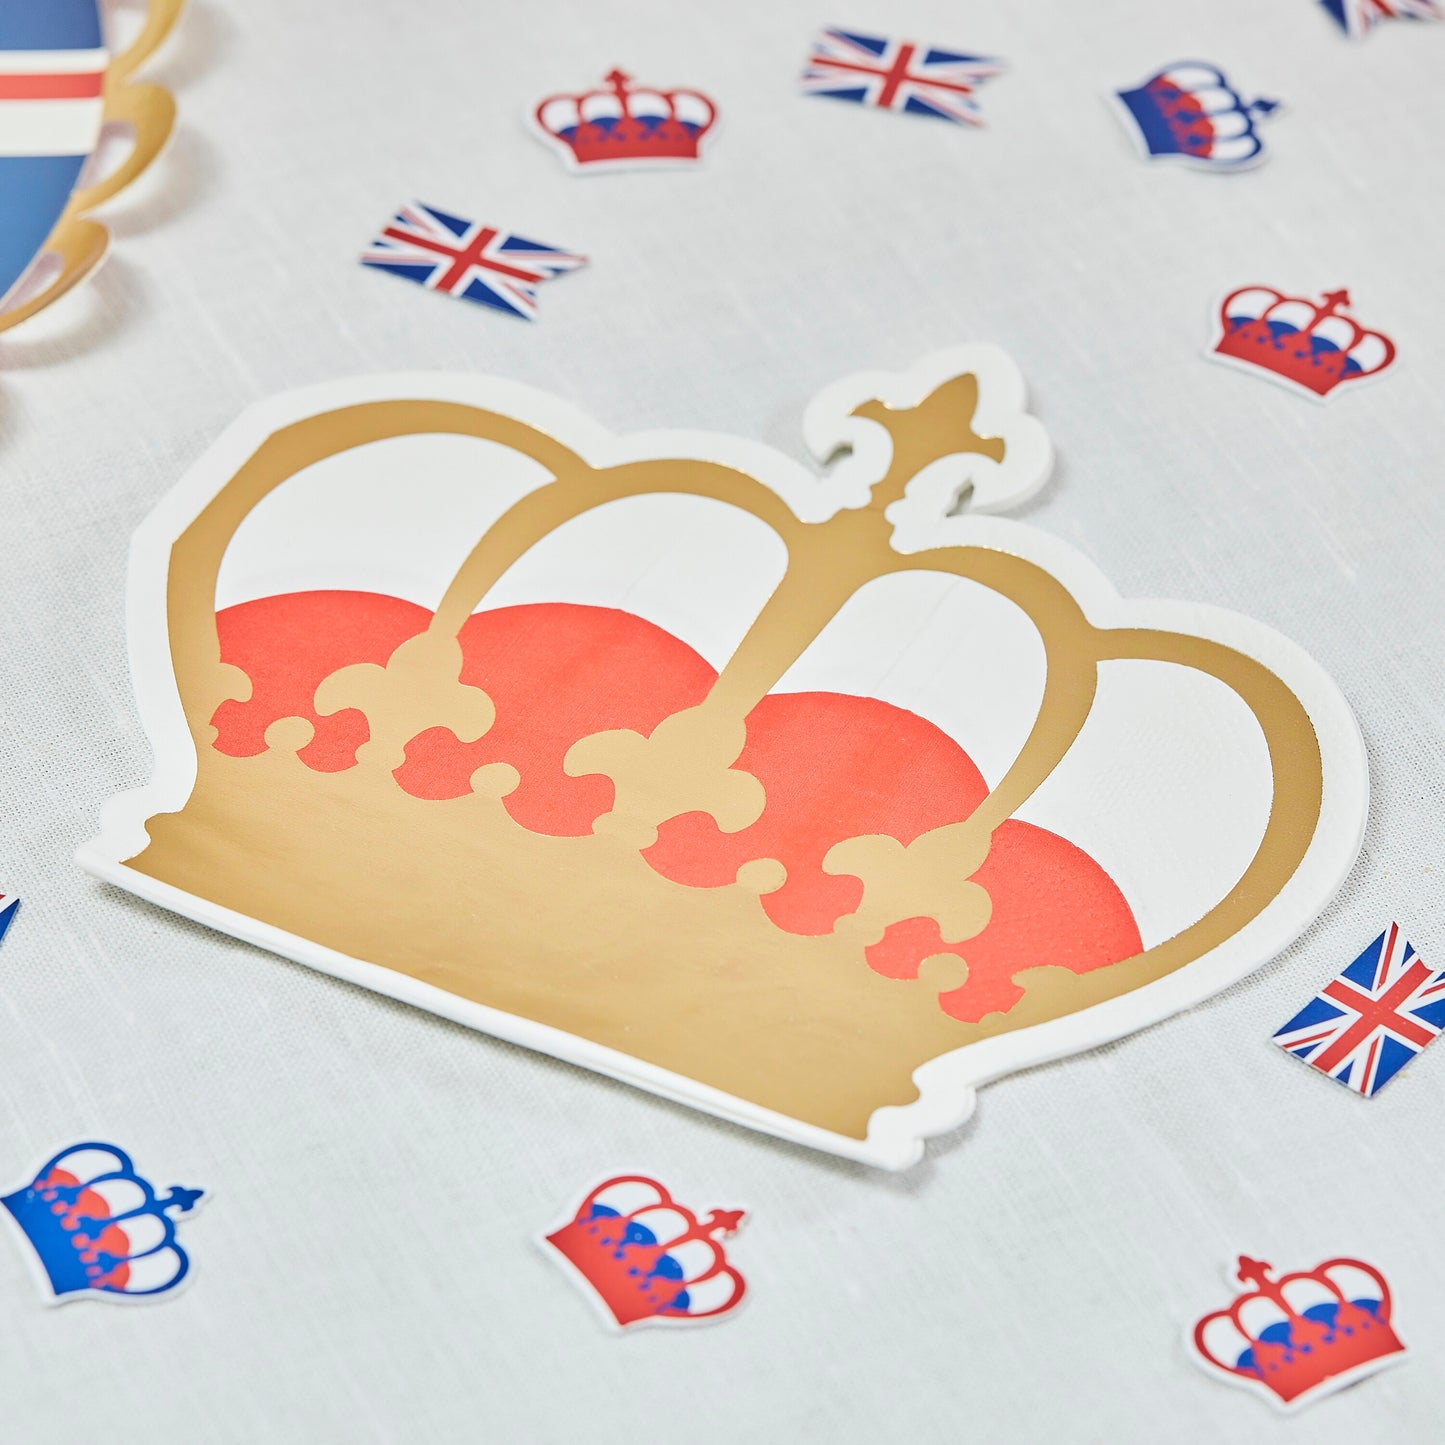 King's Coronation Crown Napkins